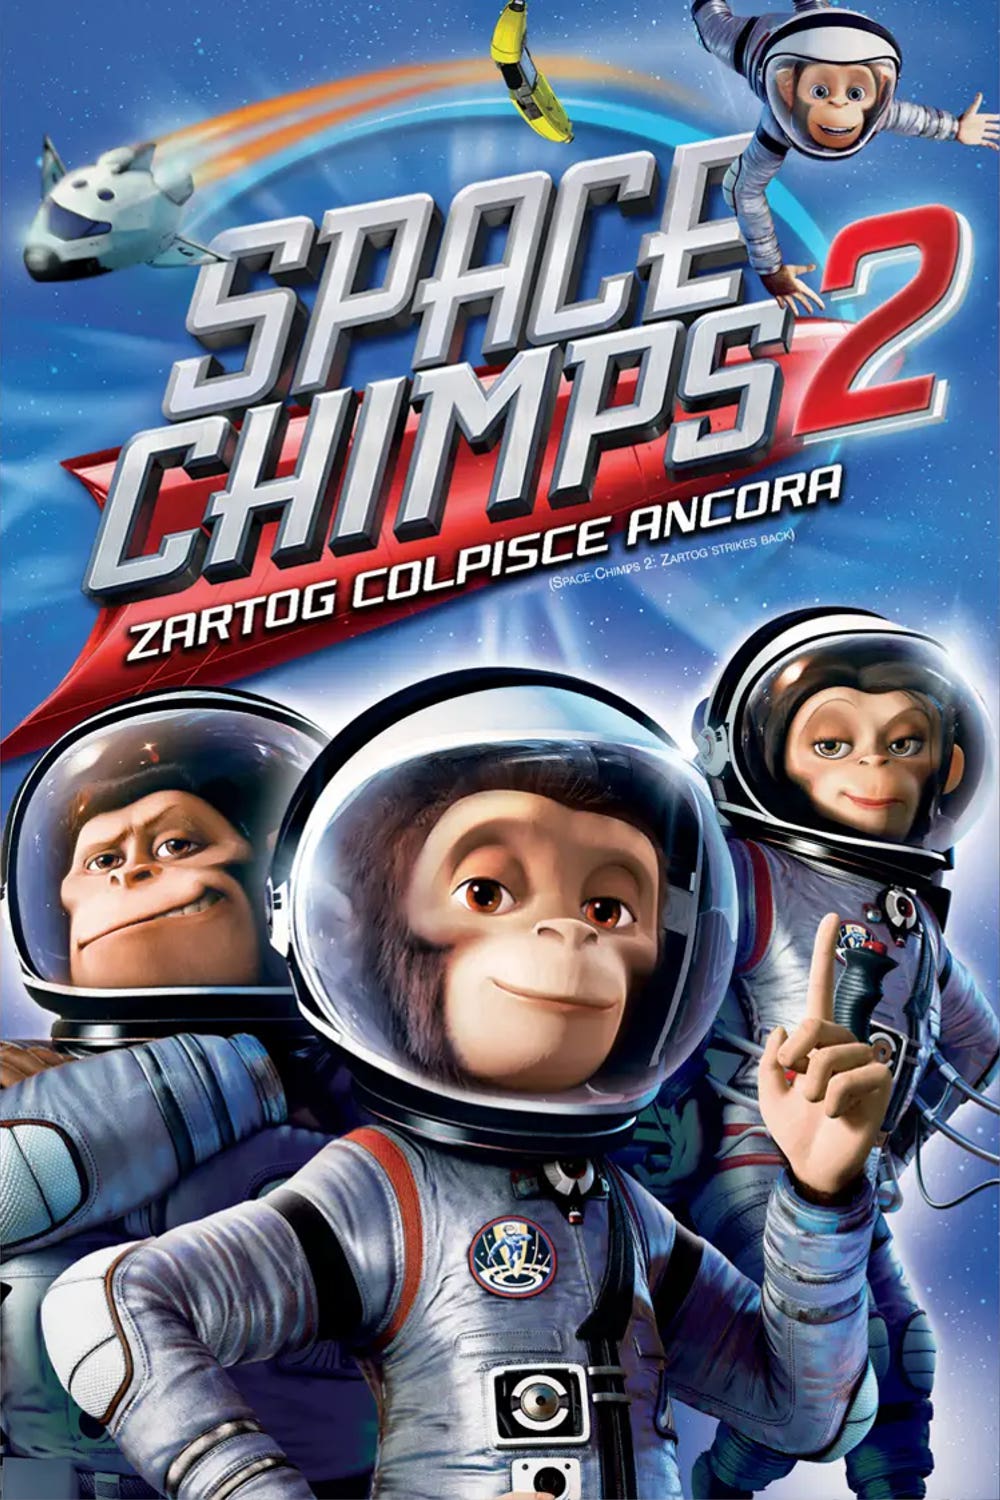 Space Chimps 2: Zartog colpisce ancora (2010)